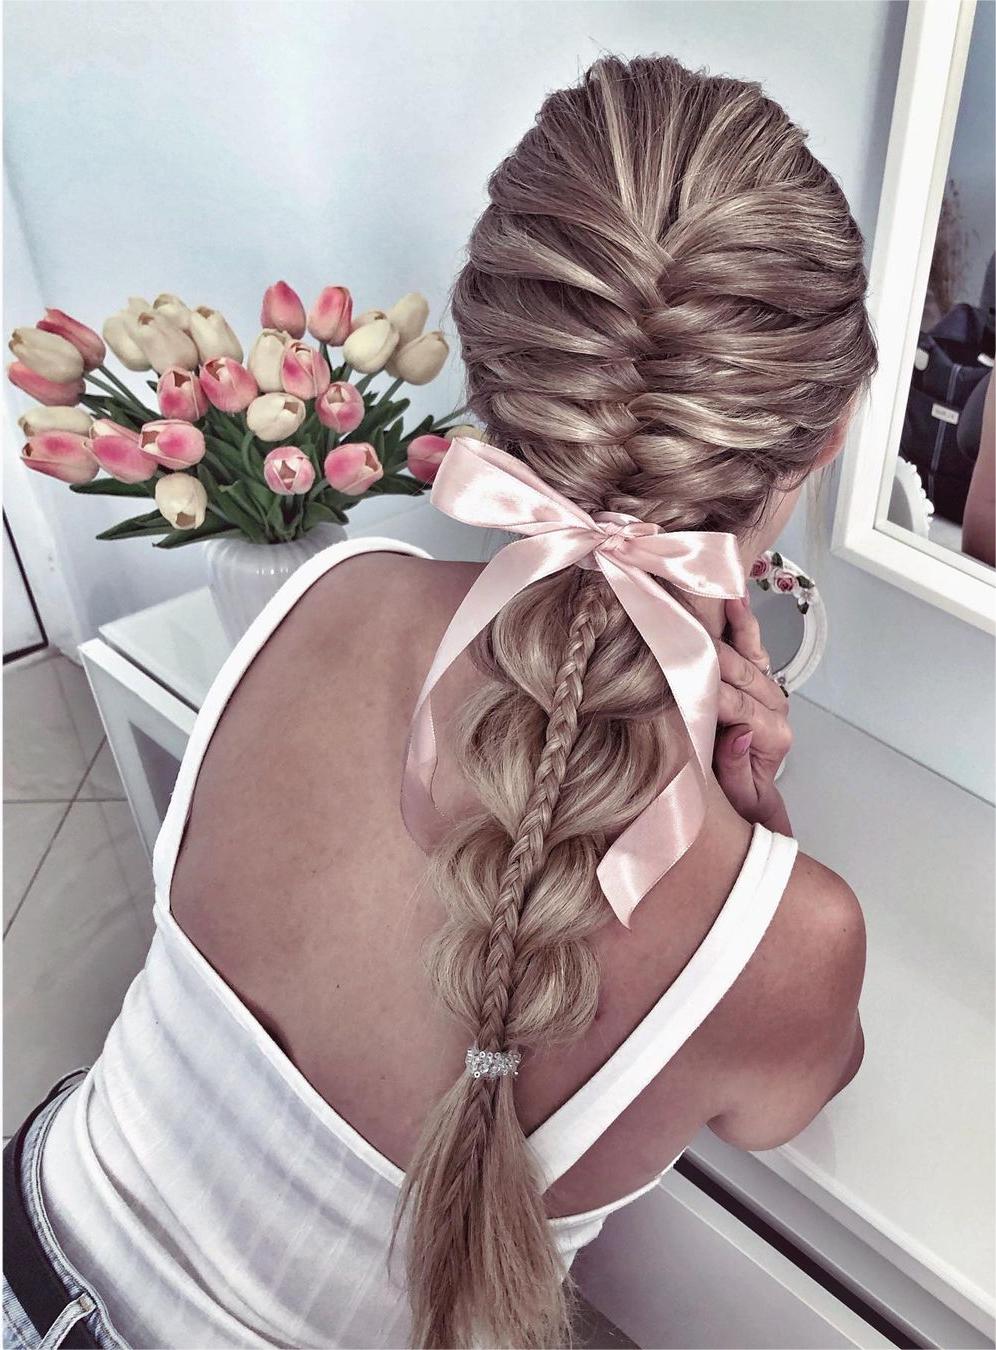 fishtail braided hairstyle via zhanna_syniavsk